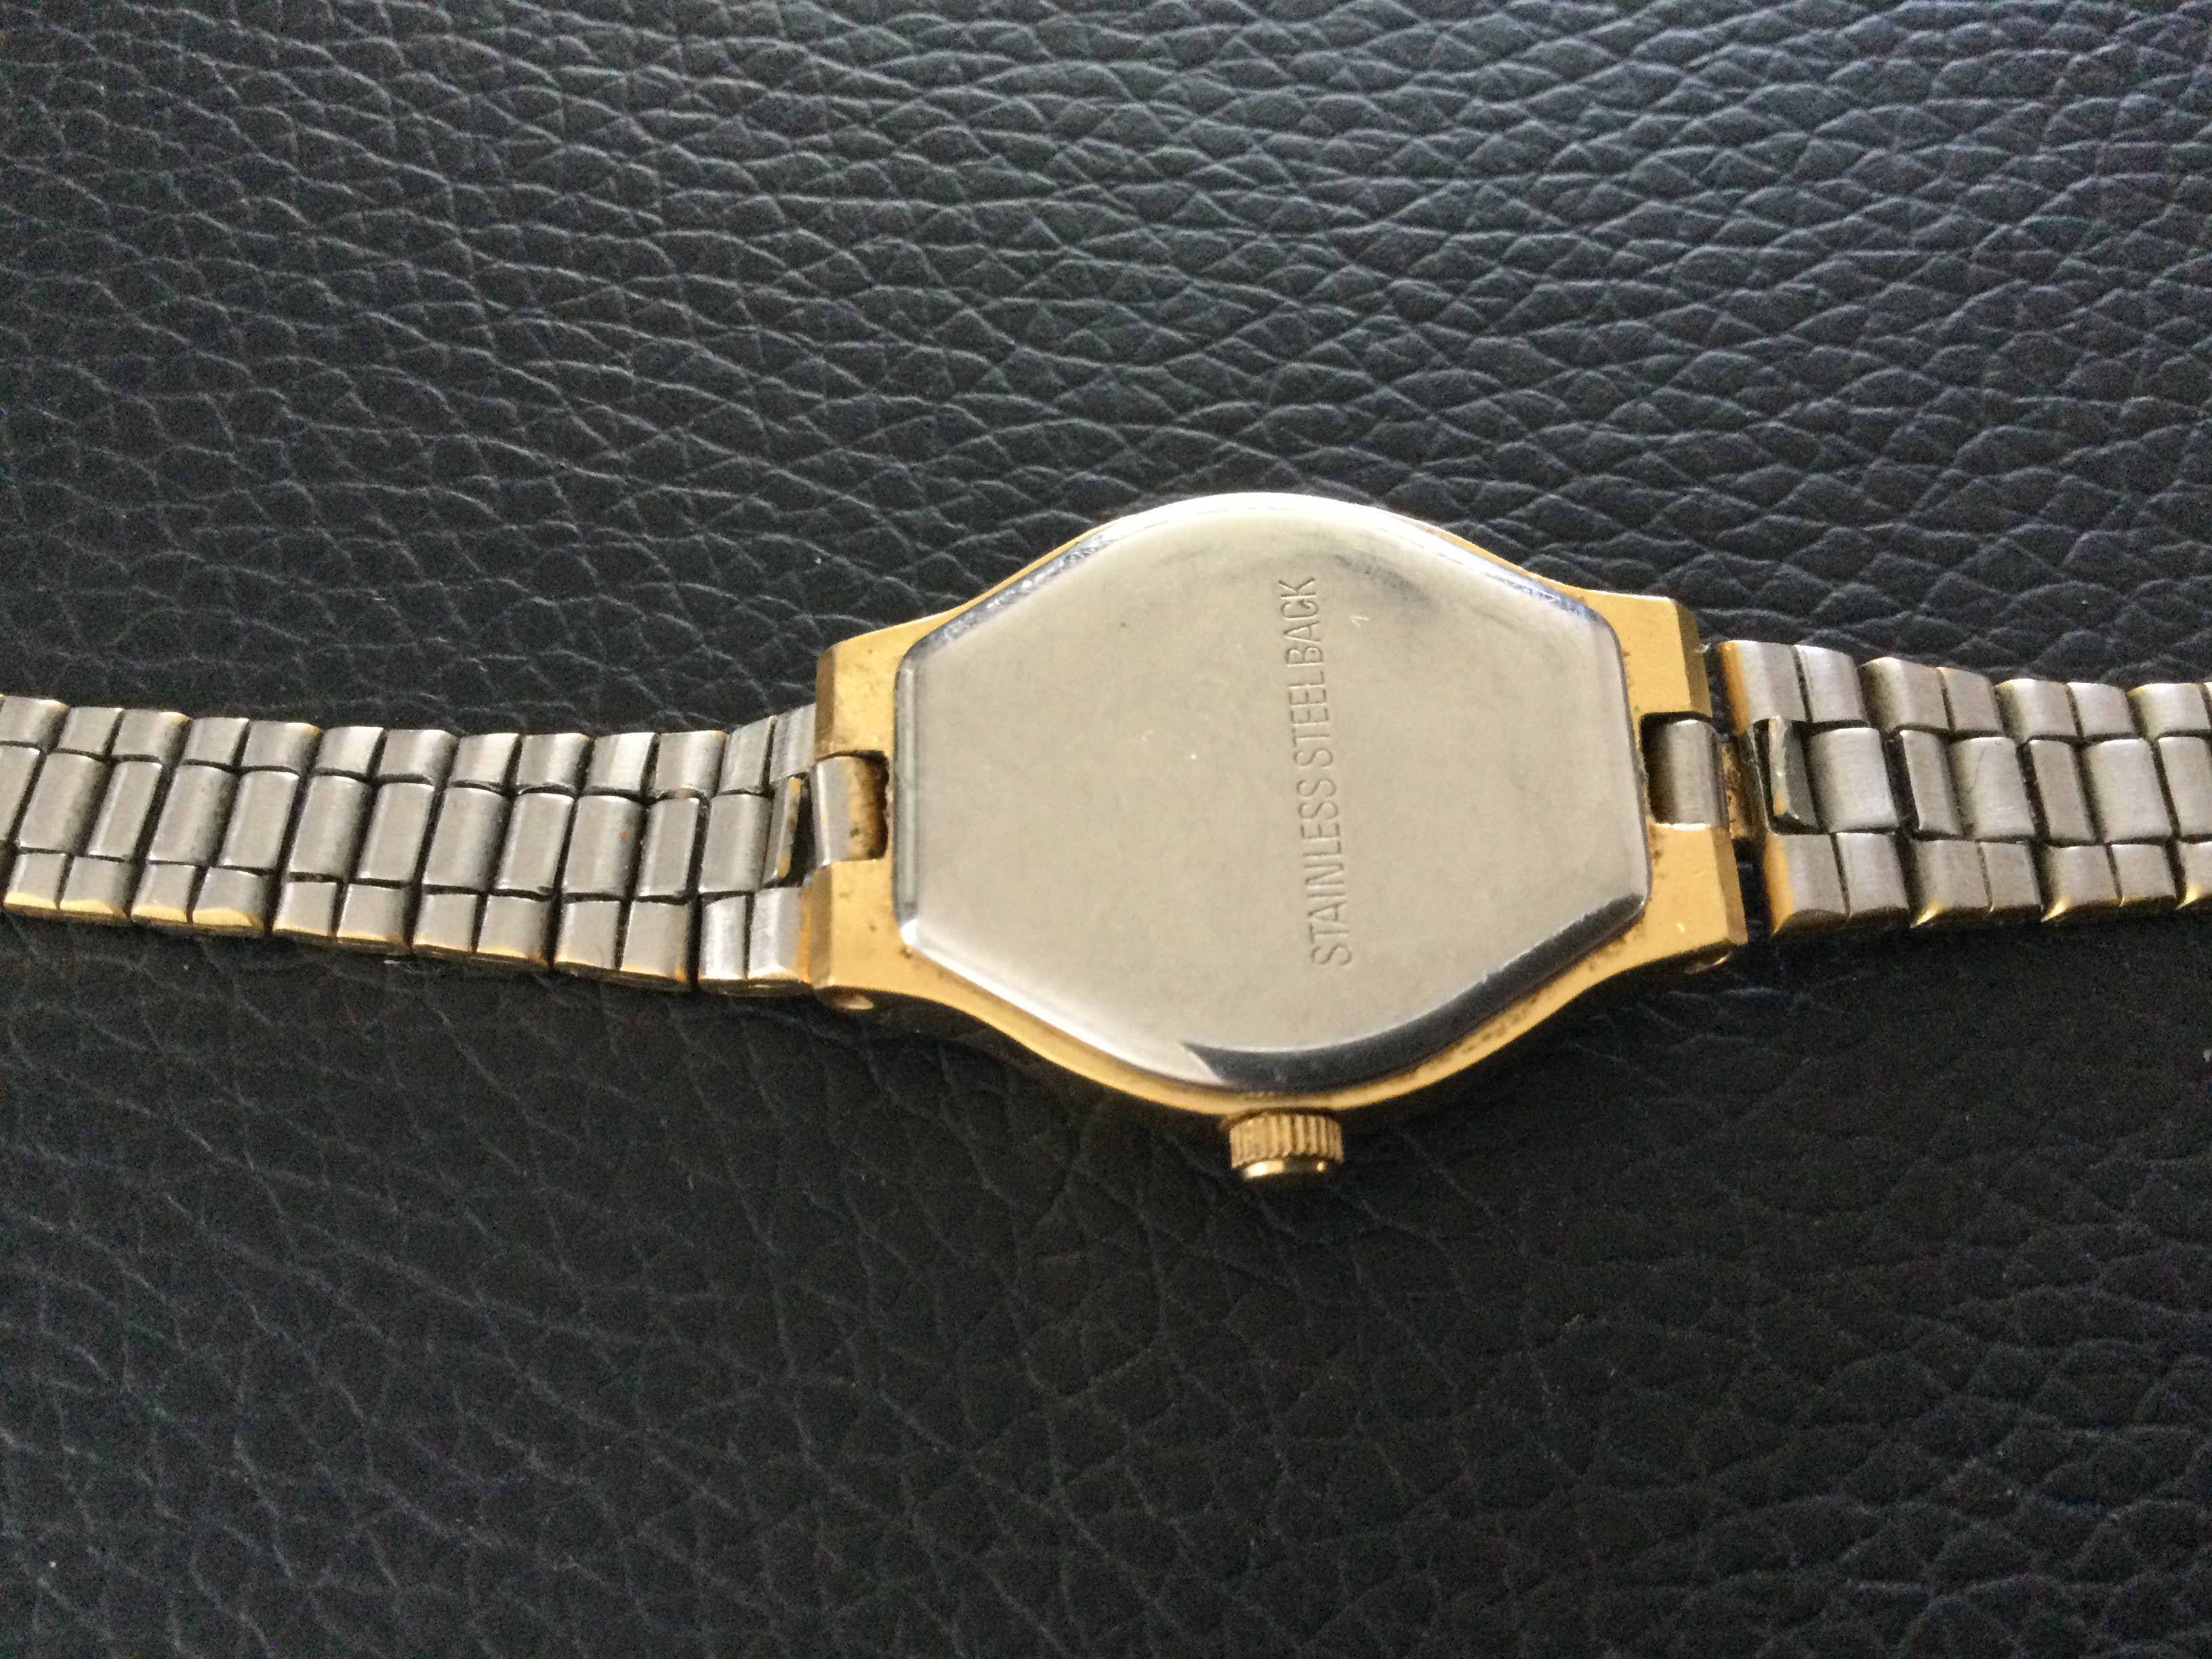 Sekonda Quartz Ladies Wristwatch (GS54) A delicate little Sekonda Quartz Ladies Wristwatch in - Image 4 of 5